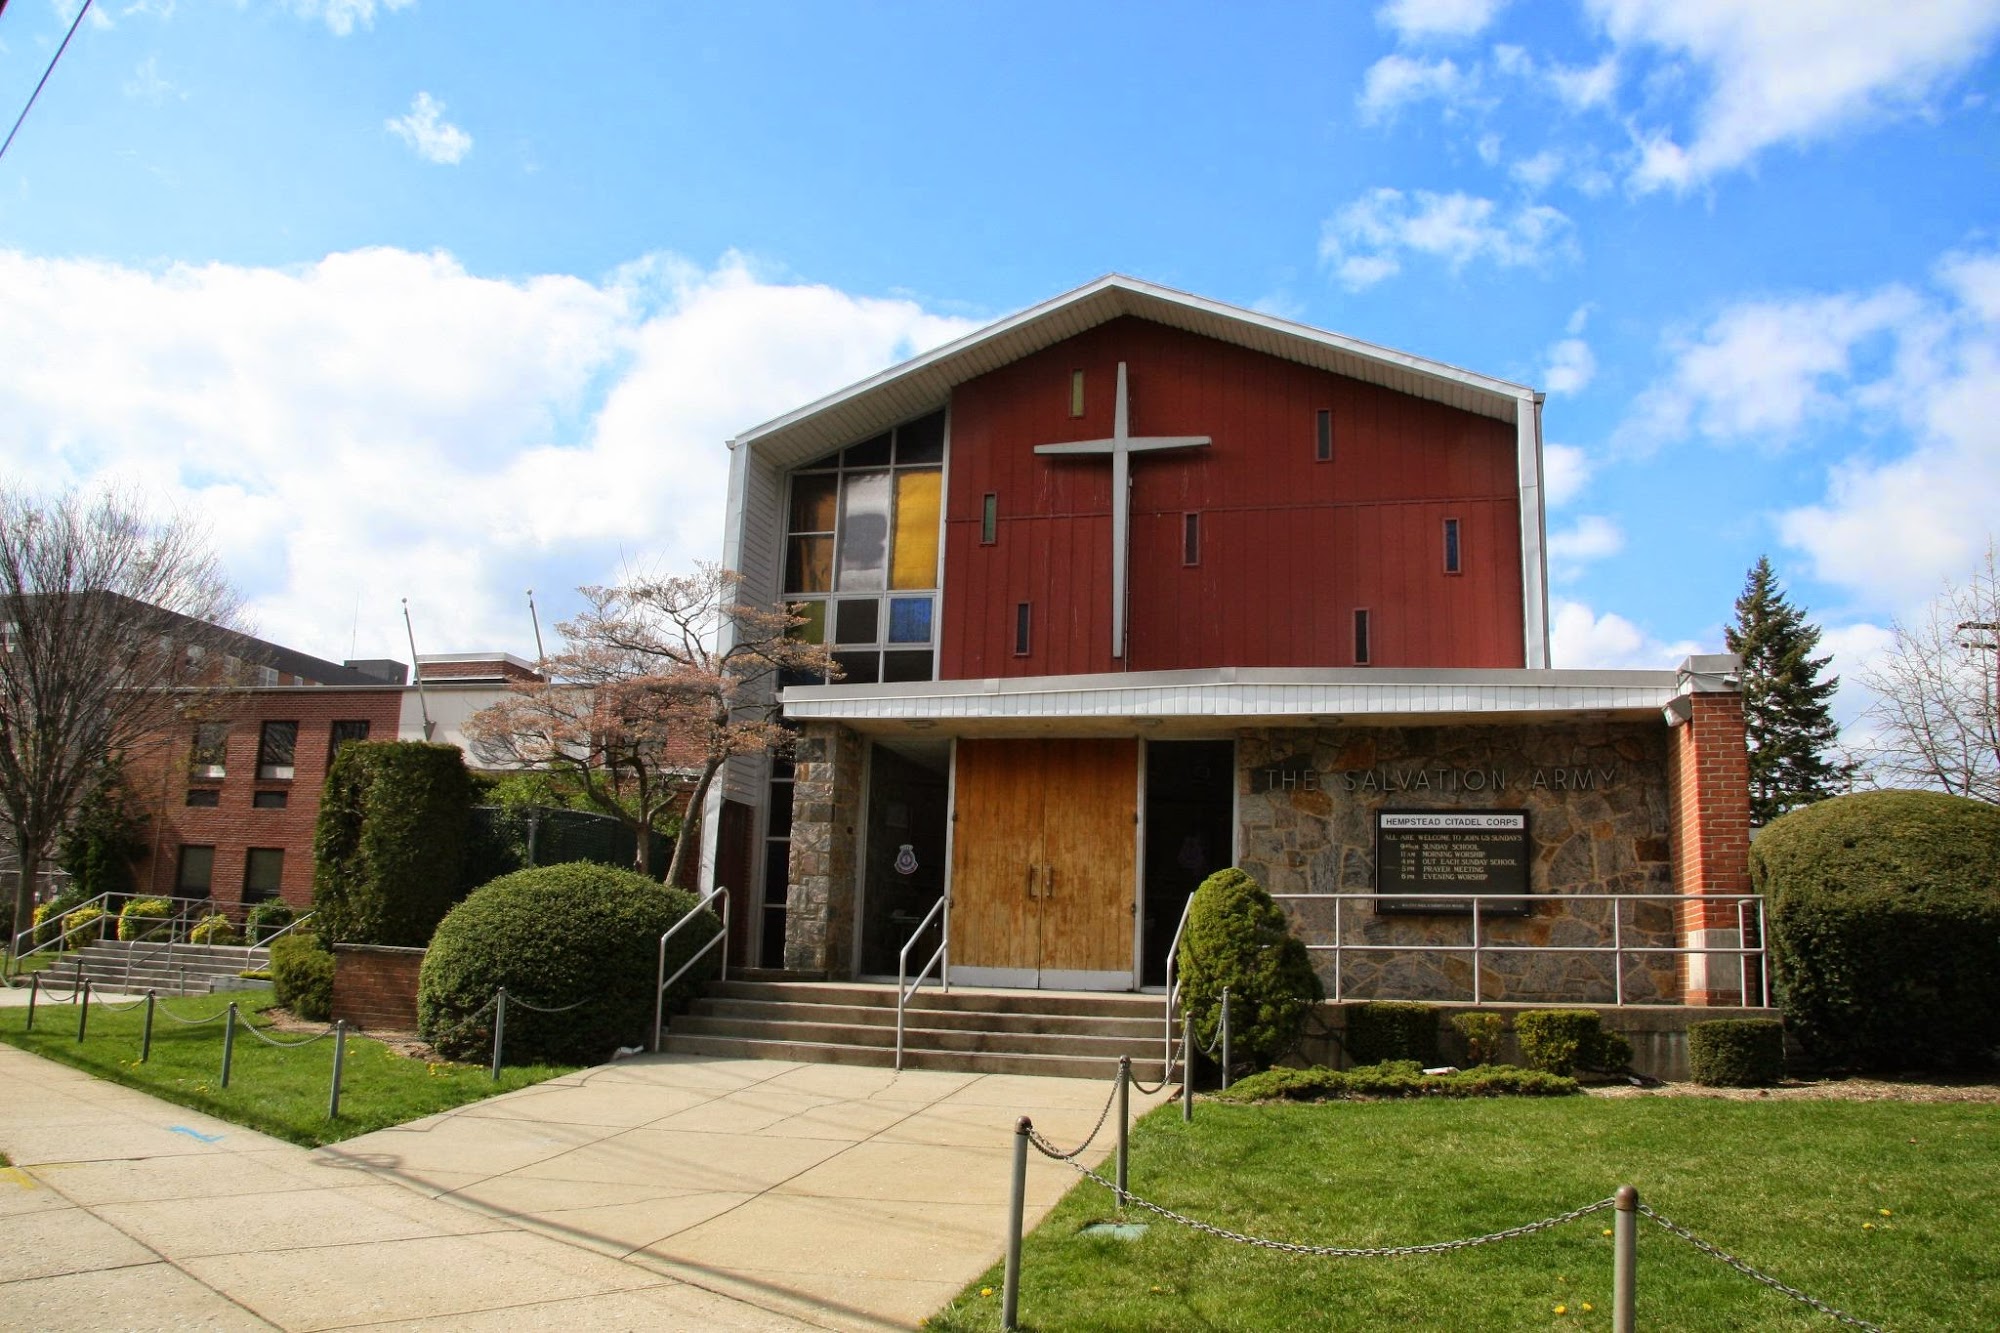 The Salvation Army Hempstead Citadel Corps Community Center